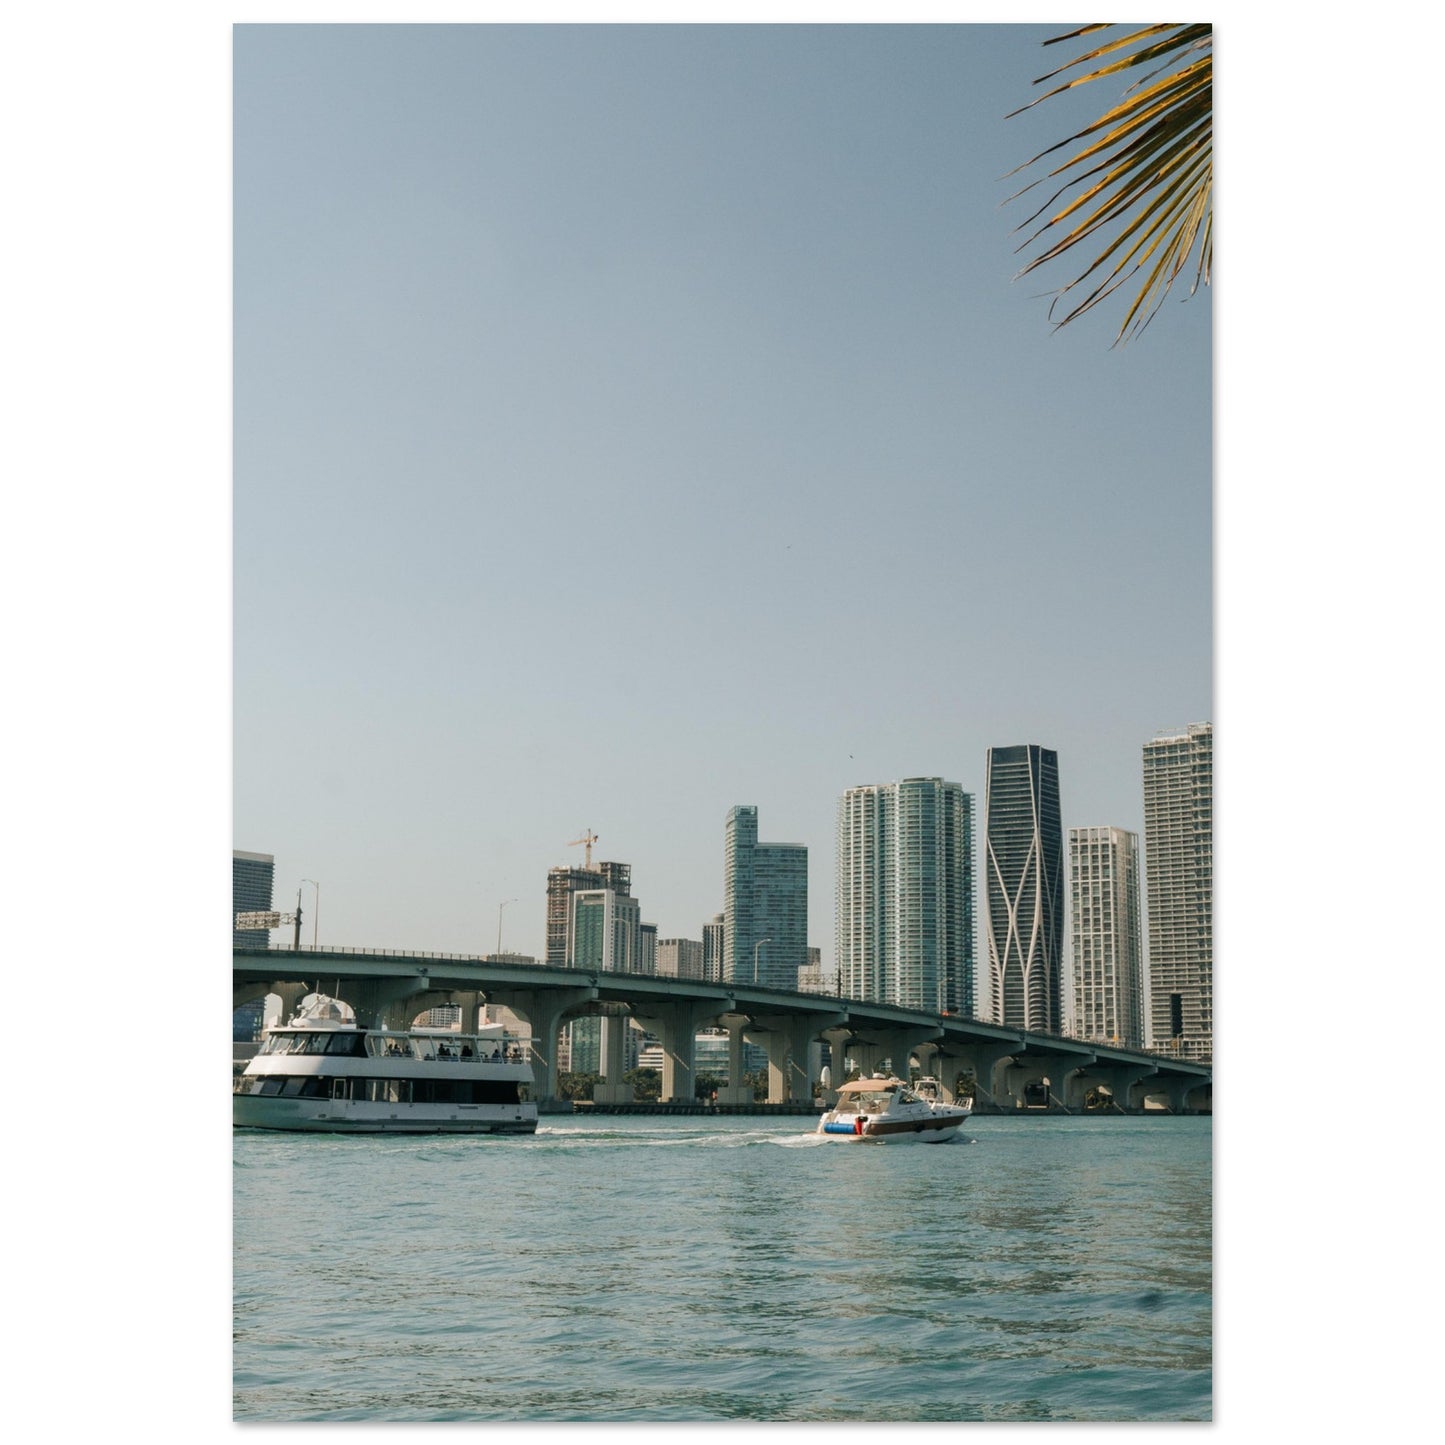 Miami Skyline Poster